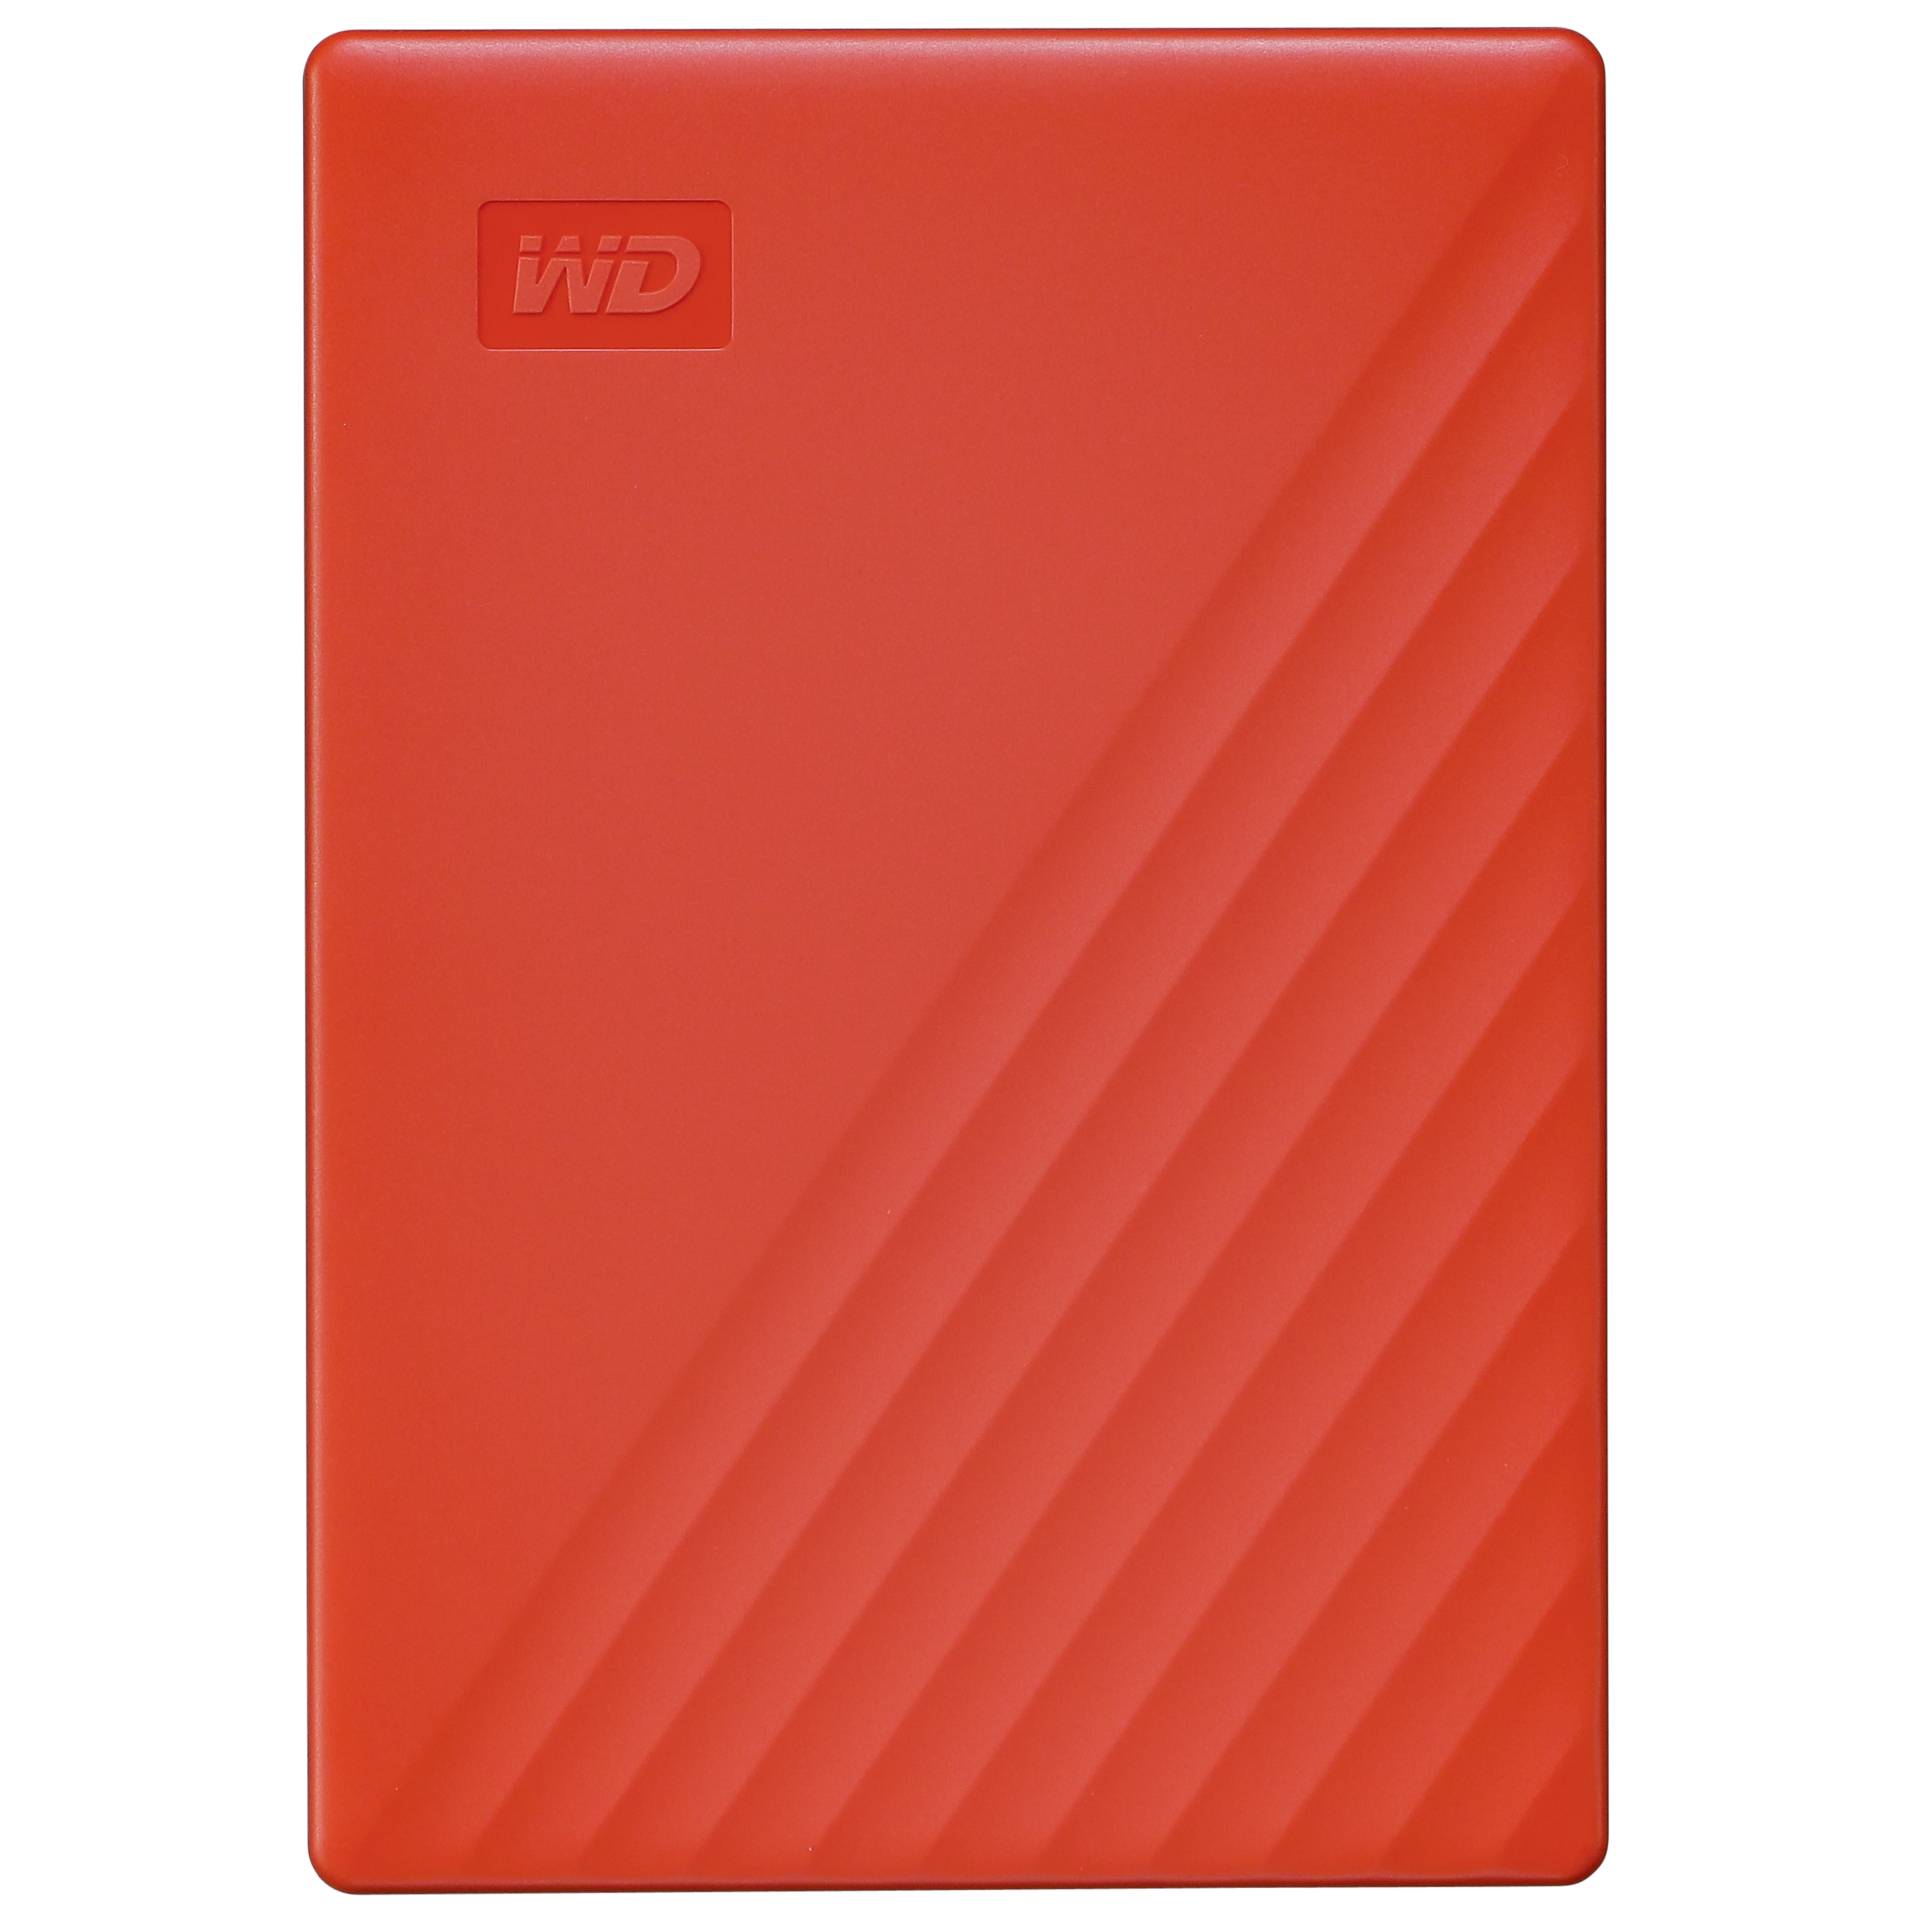 Western Digital My Passport 4TB rosso HDD USB 3.0 nuovo